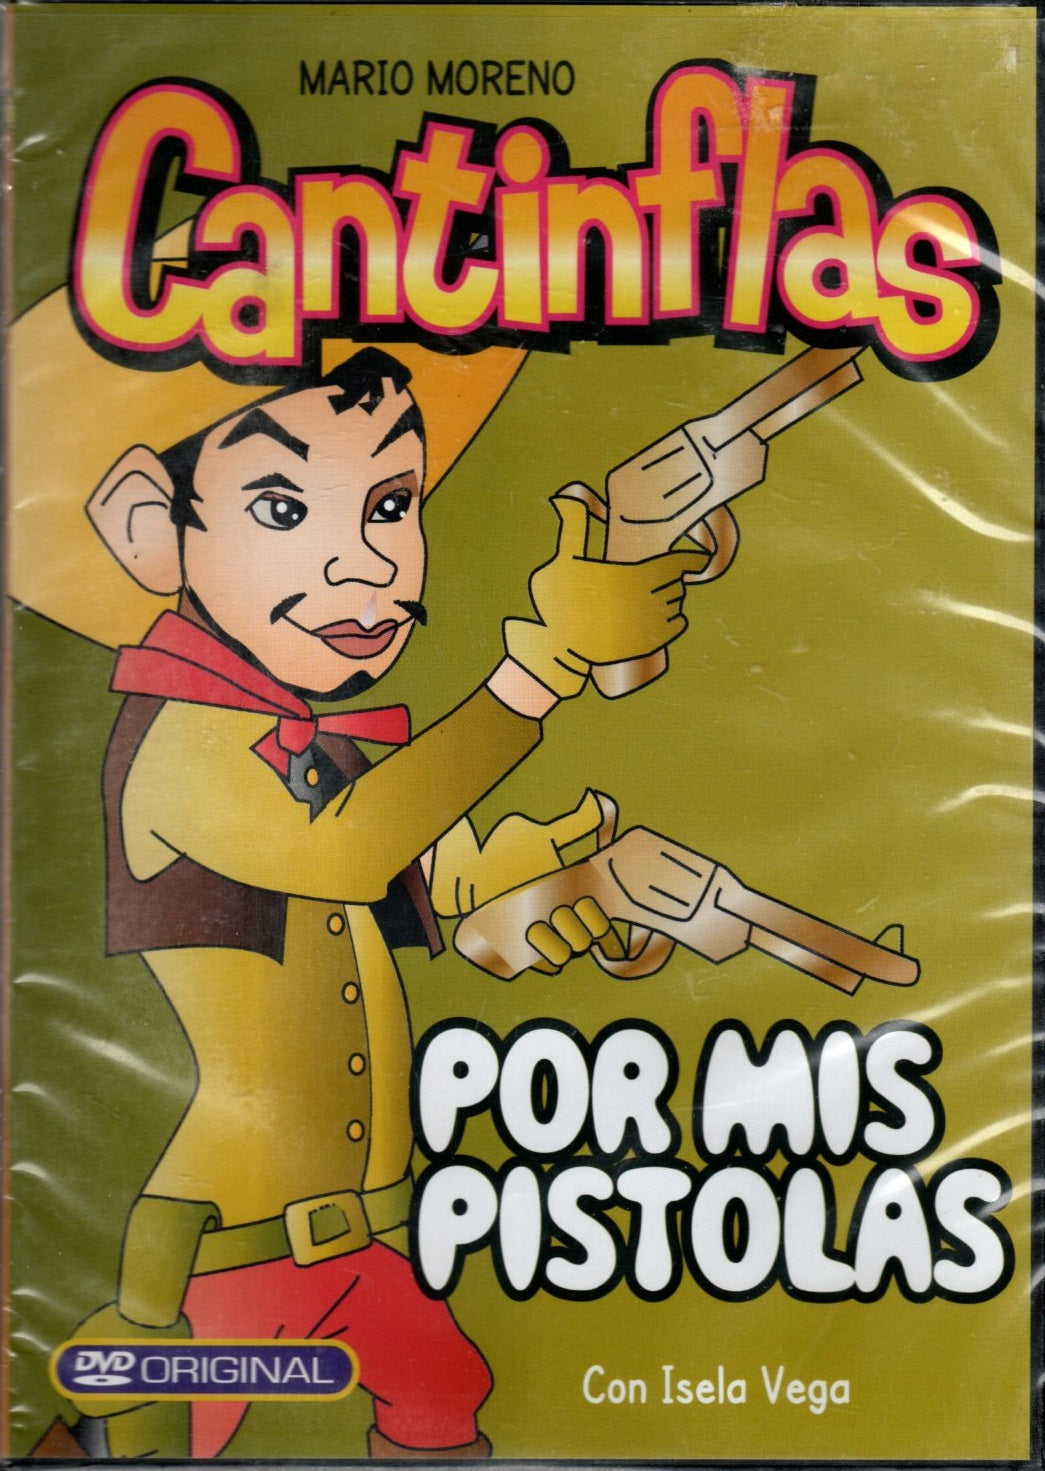 DVD Cantinflas - Por mis pistolas